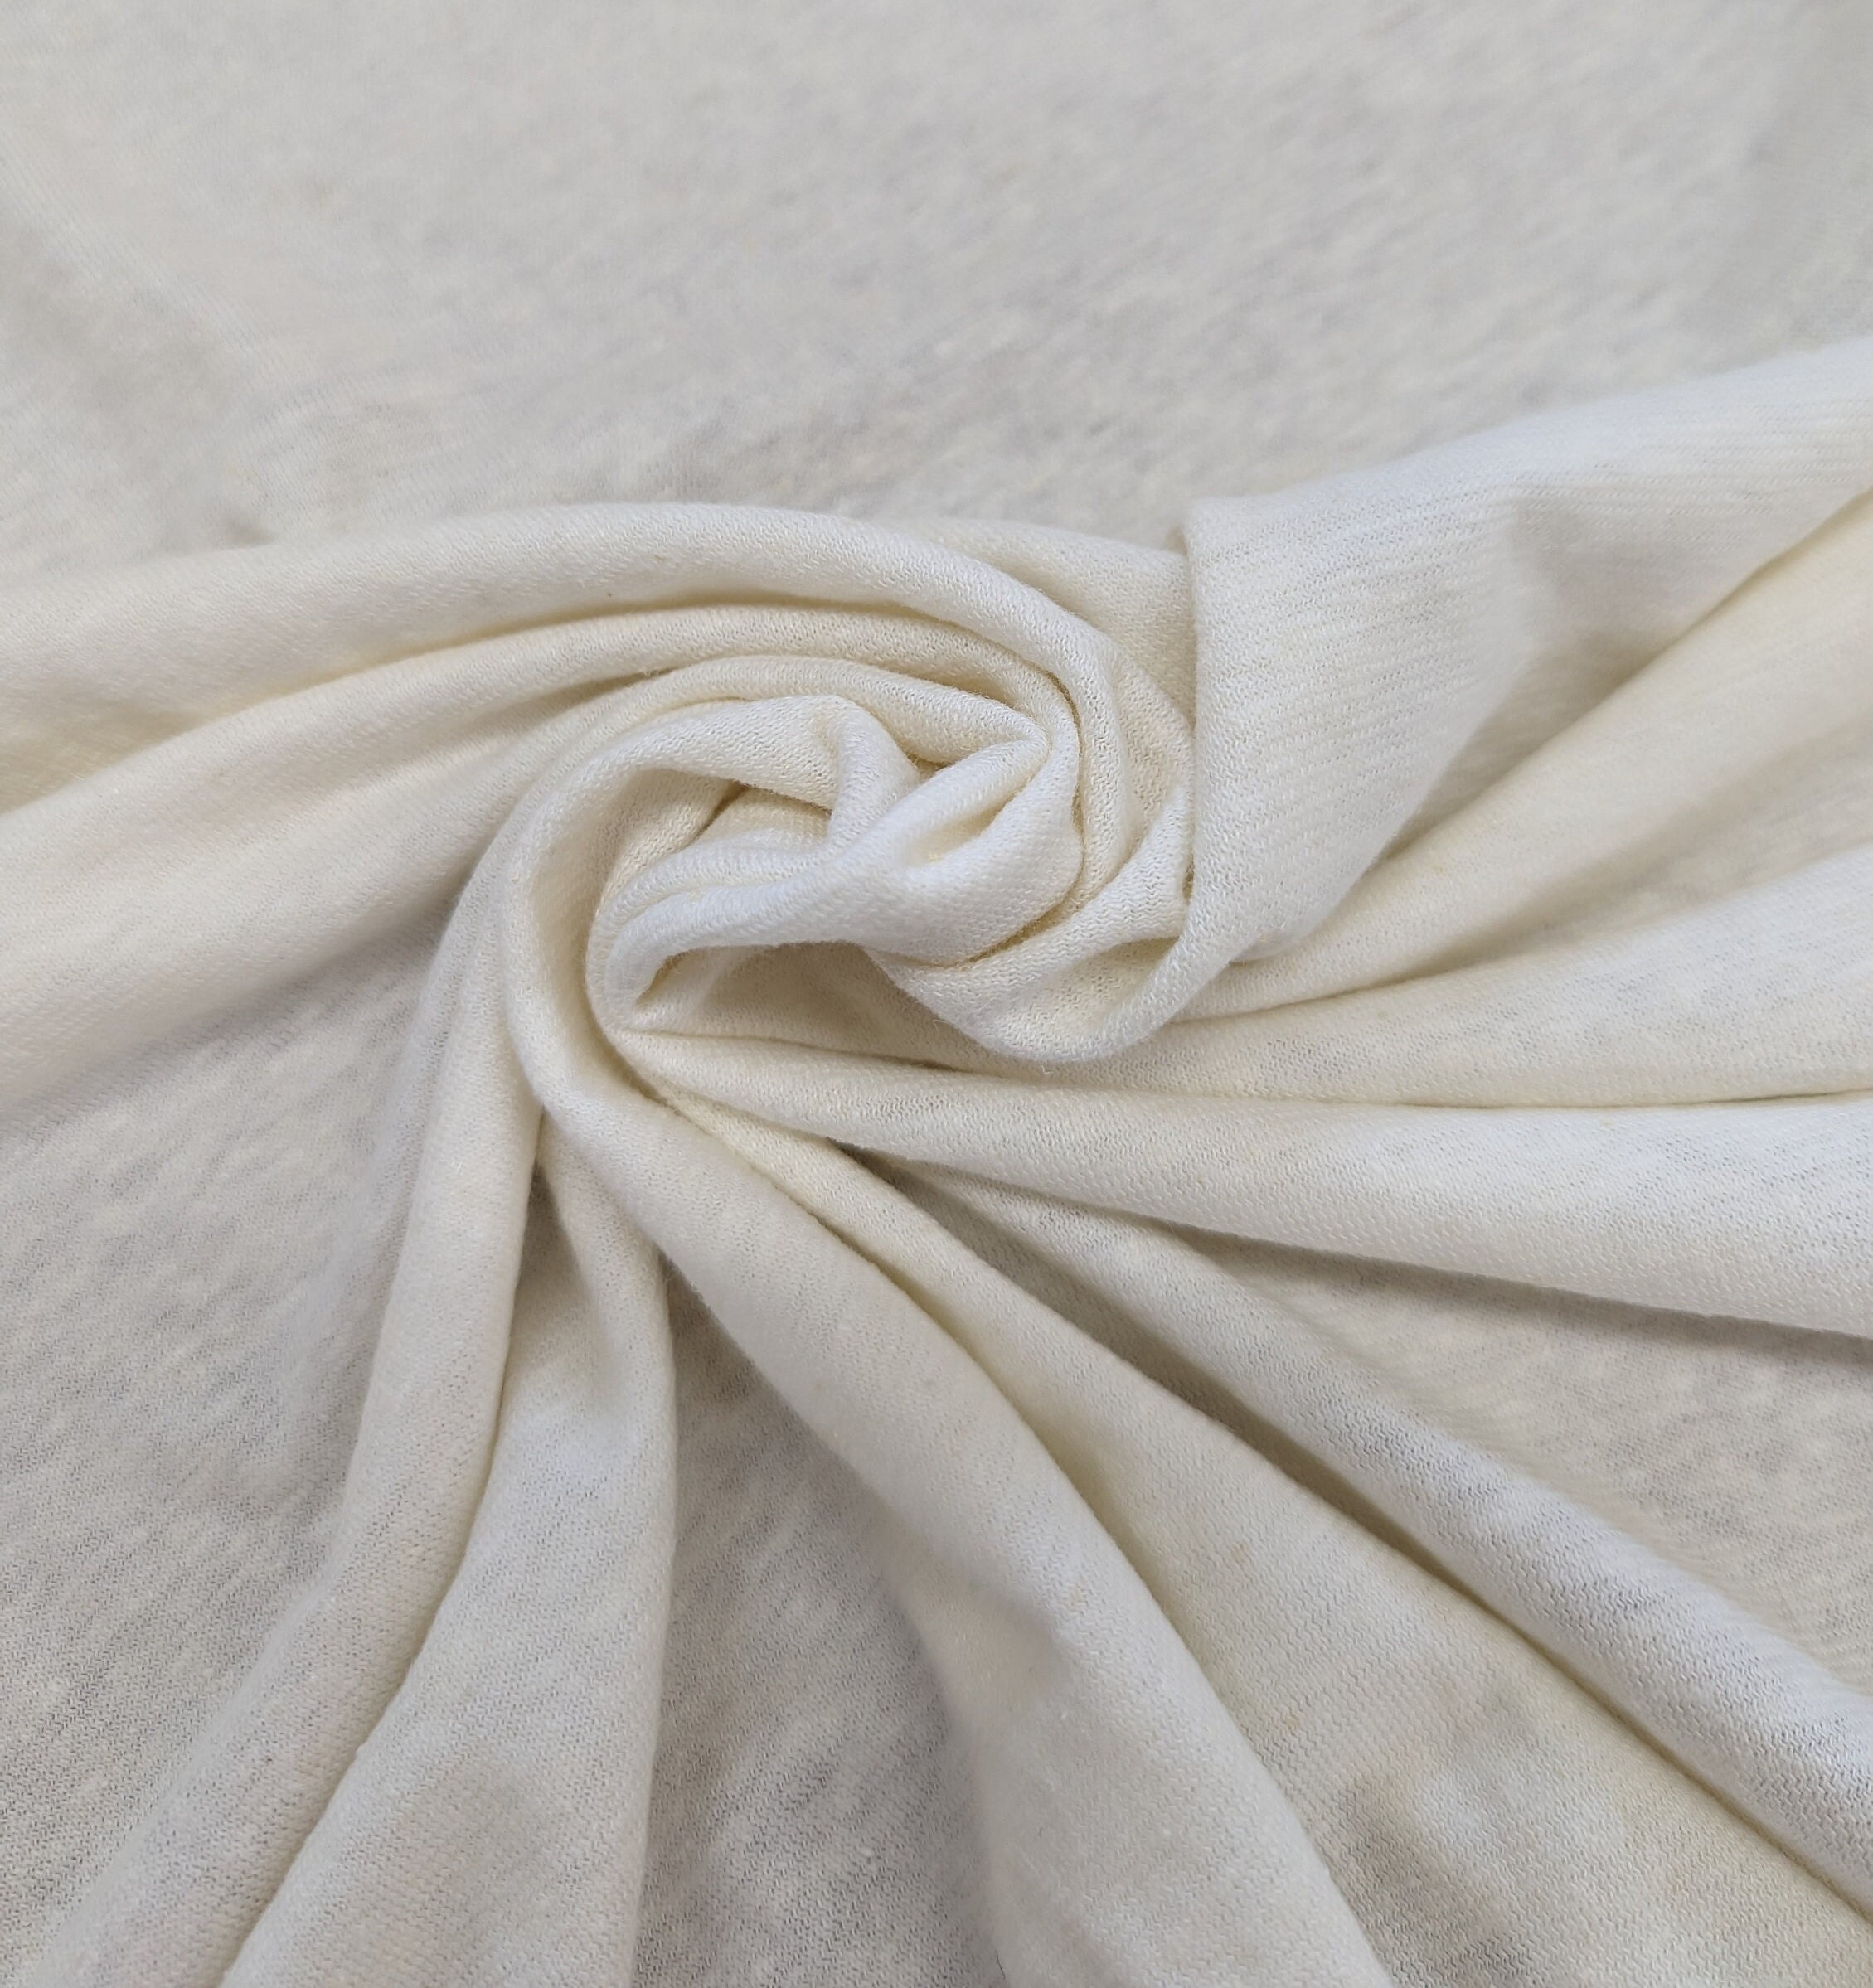 A-RB16: Hemp/ Organic Cotton/Lycra Rib Knit